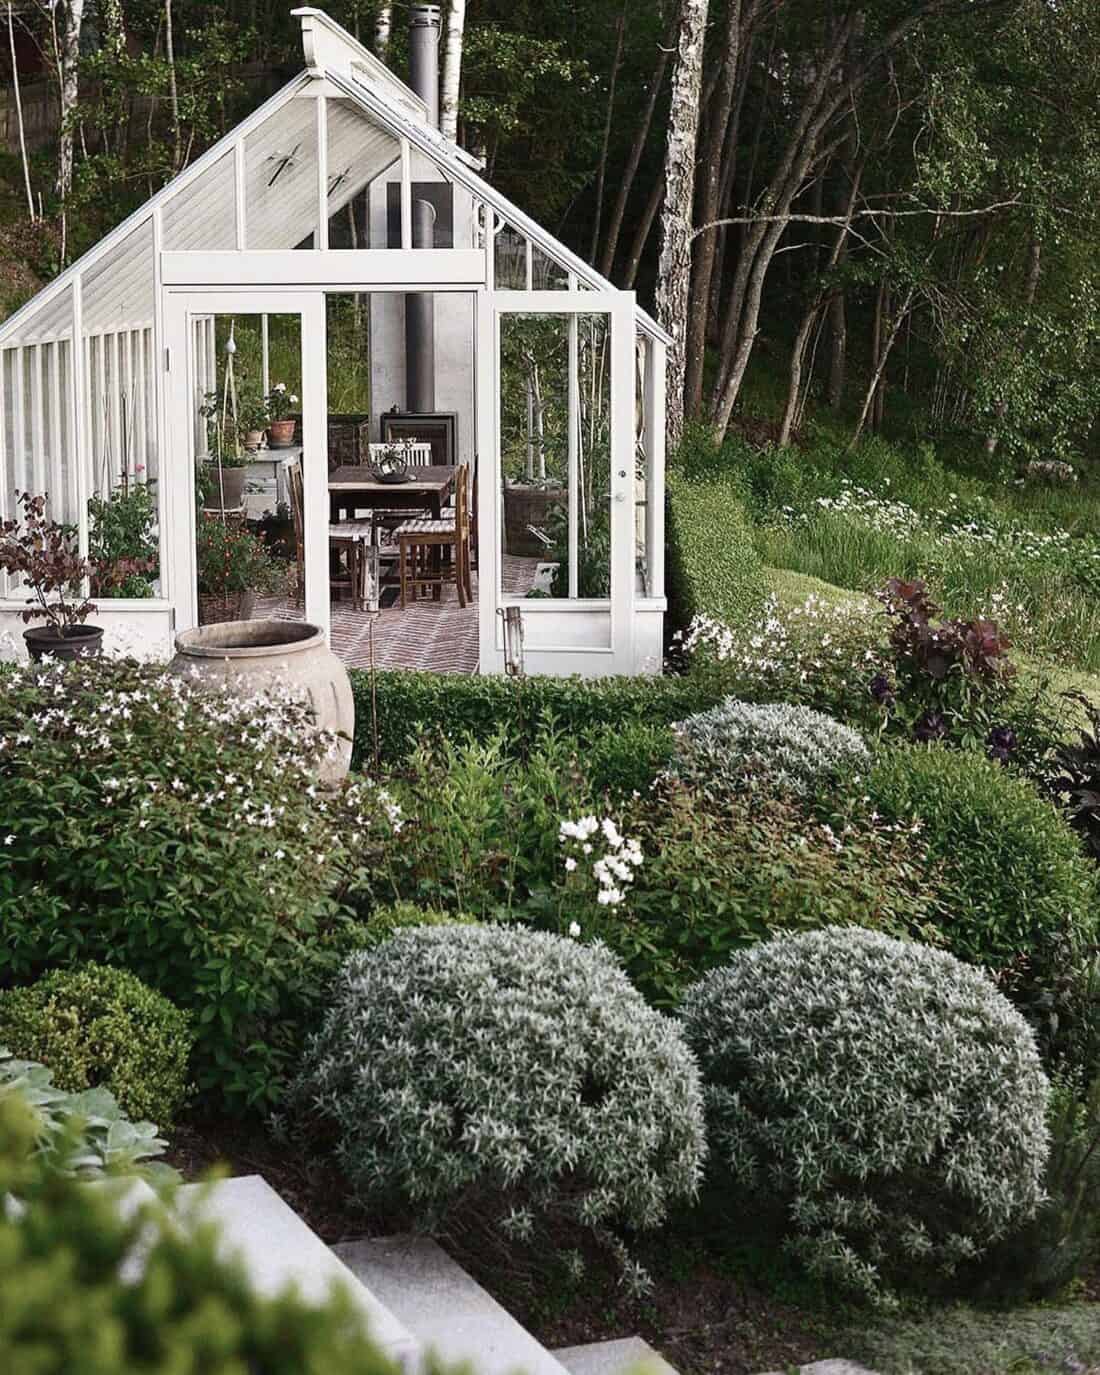 A serene greenhouse nestled amidst an english garden.